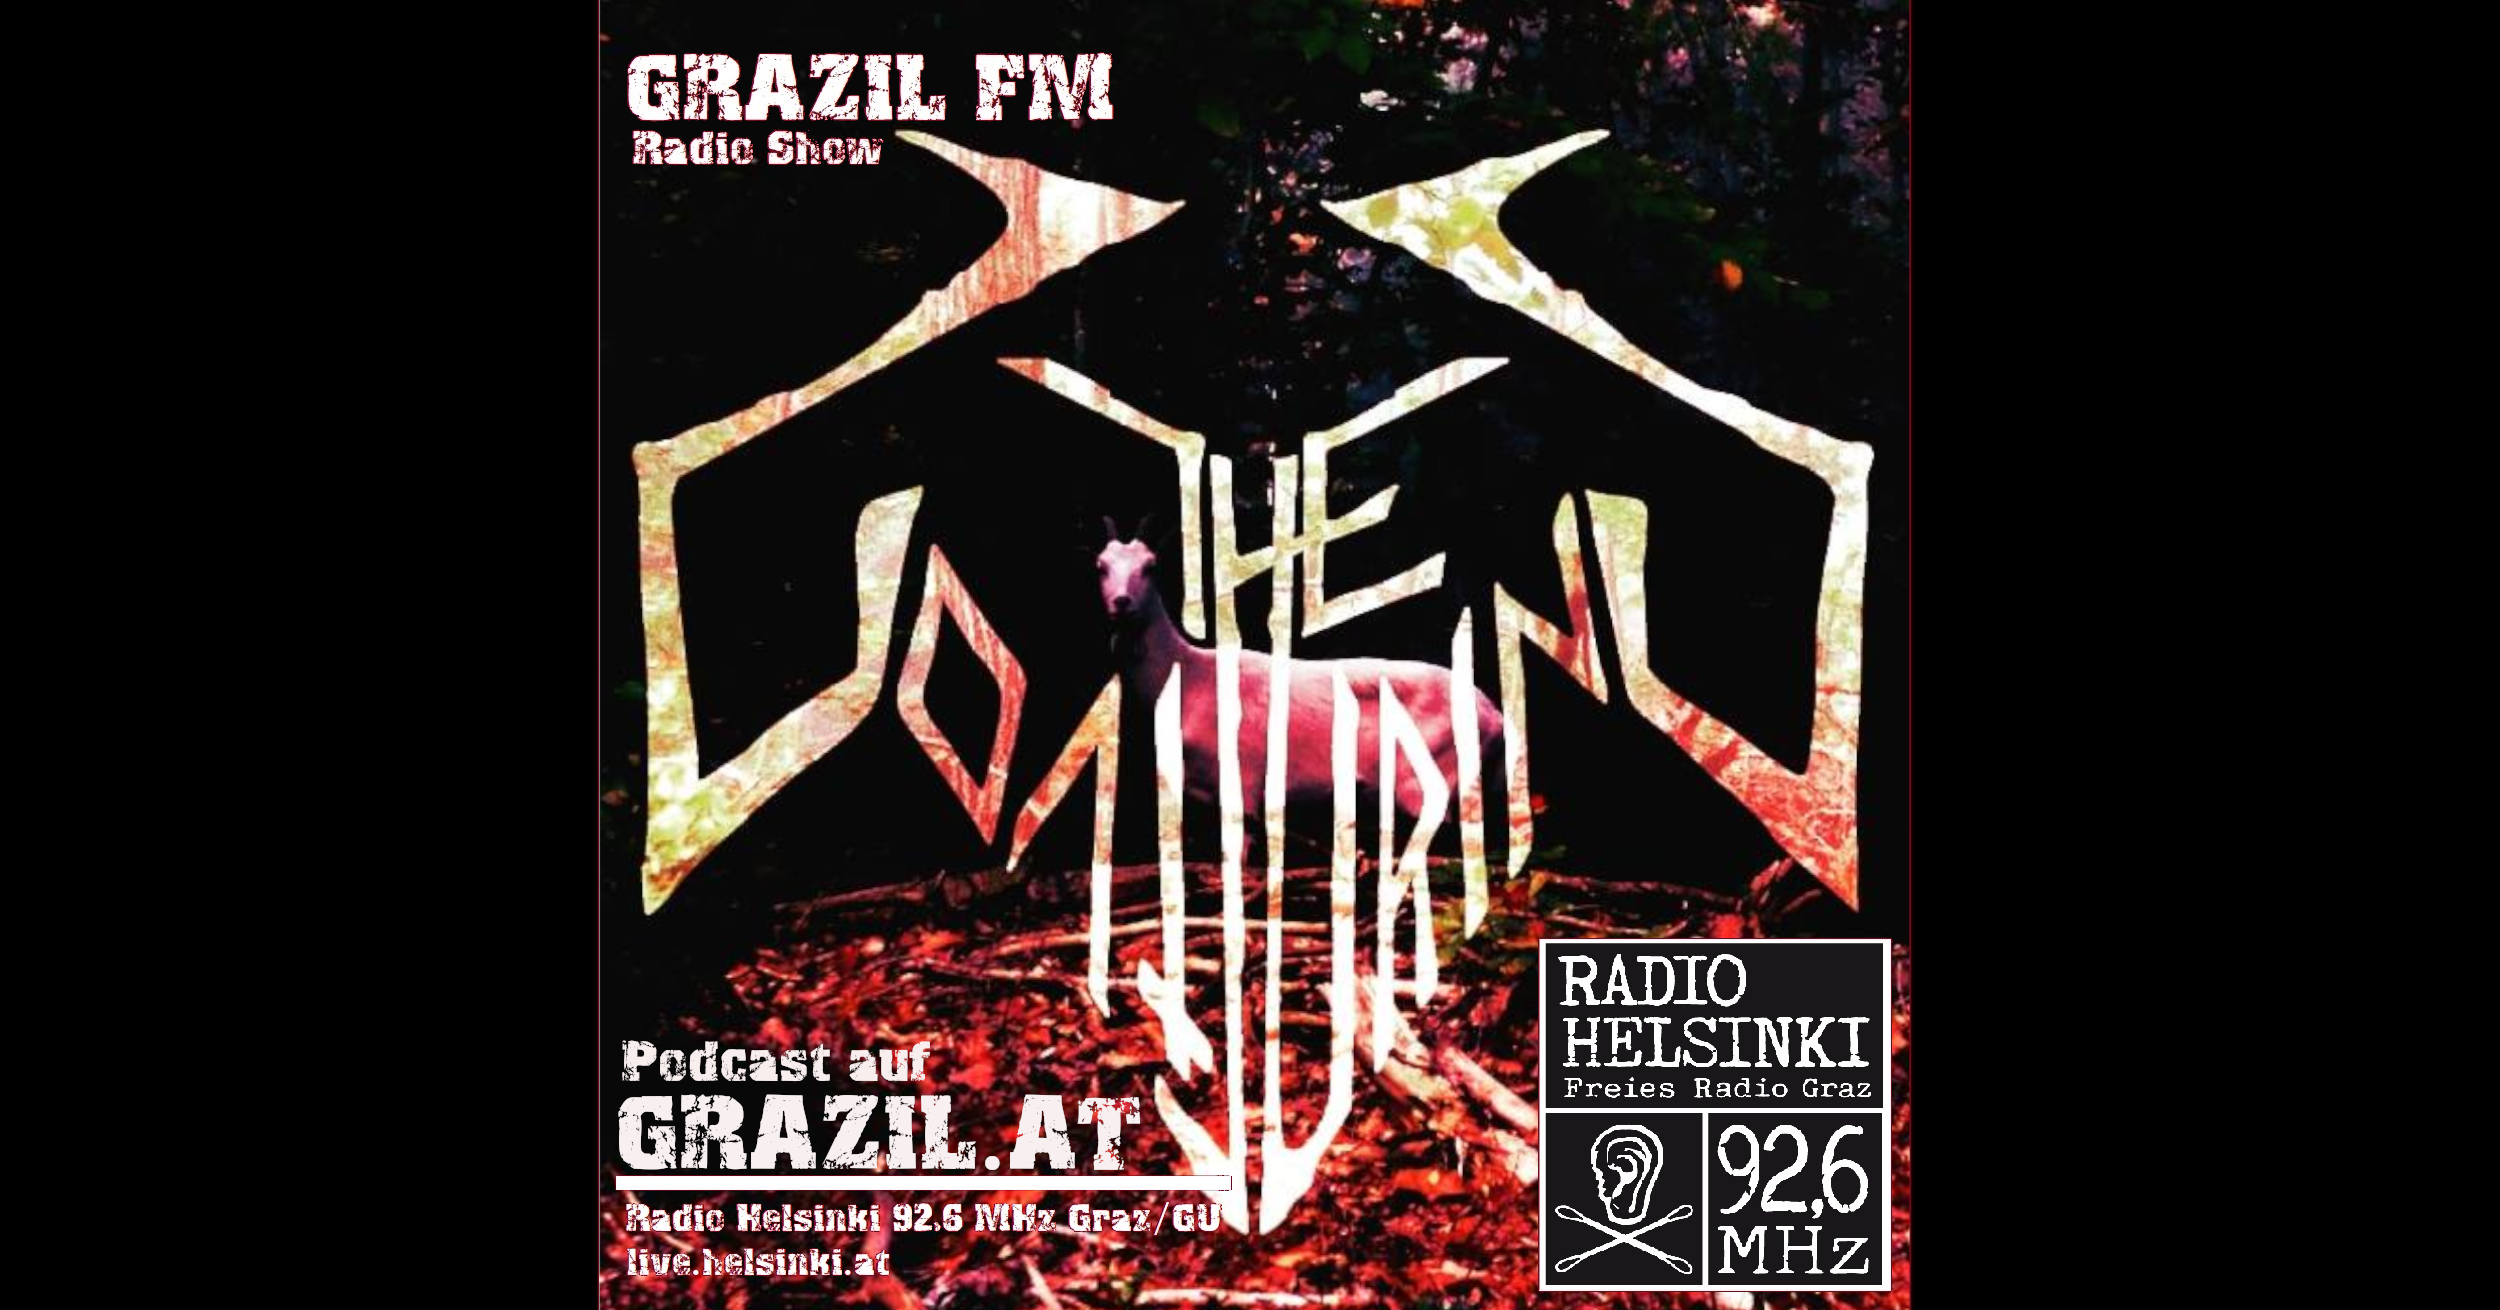 grazil FM Podcast - The Goatjuring - Radio Helsinki grazil Records Cle Pecher